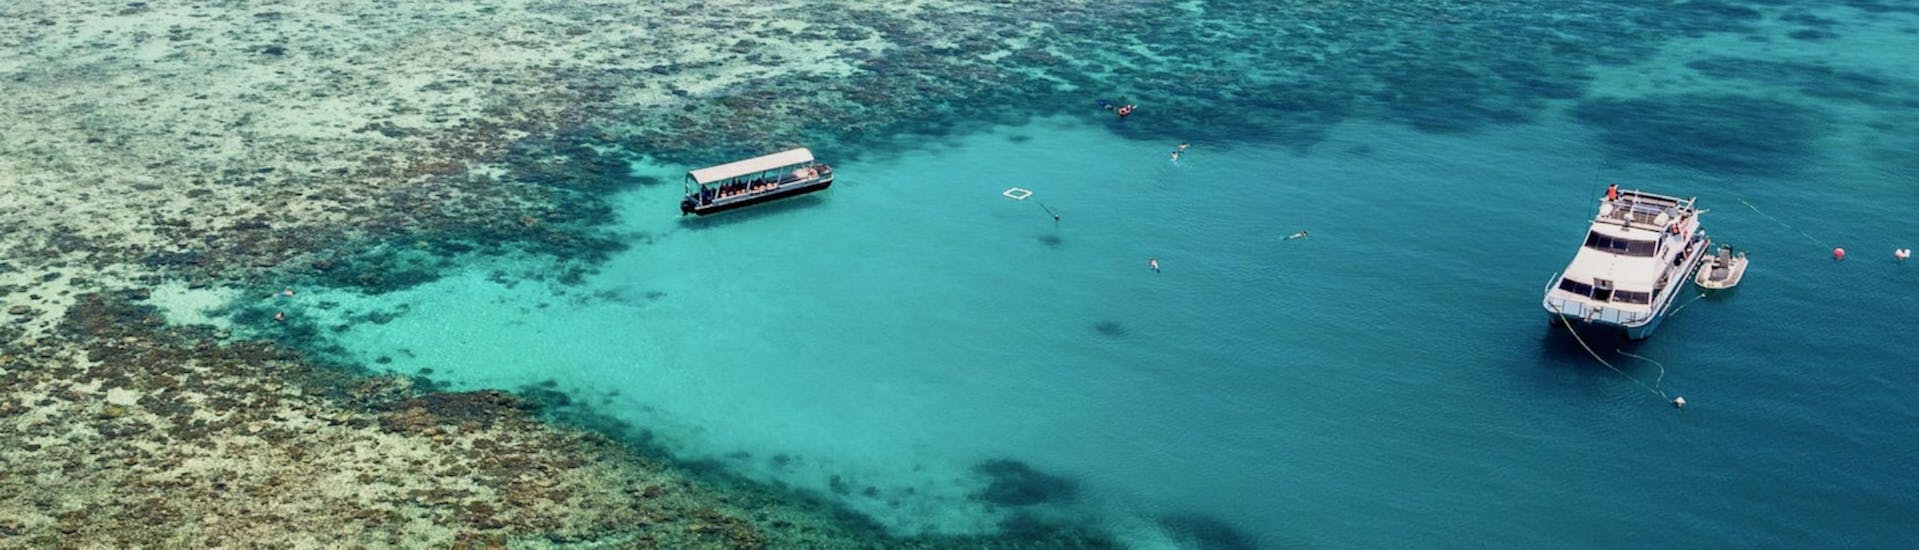 Balade en bateau - Great Barrier Reef avec Baignade & Observation de la faune.